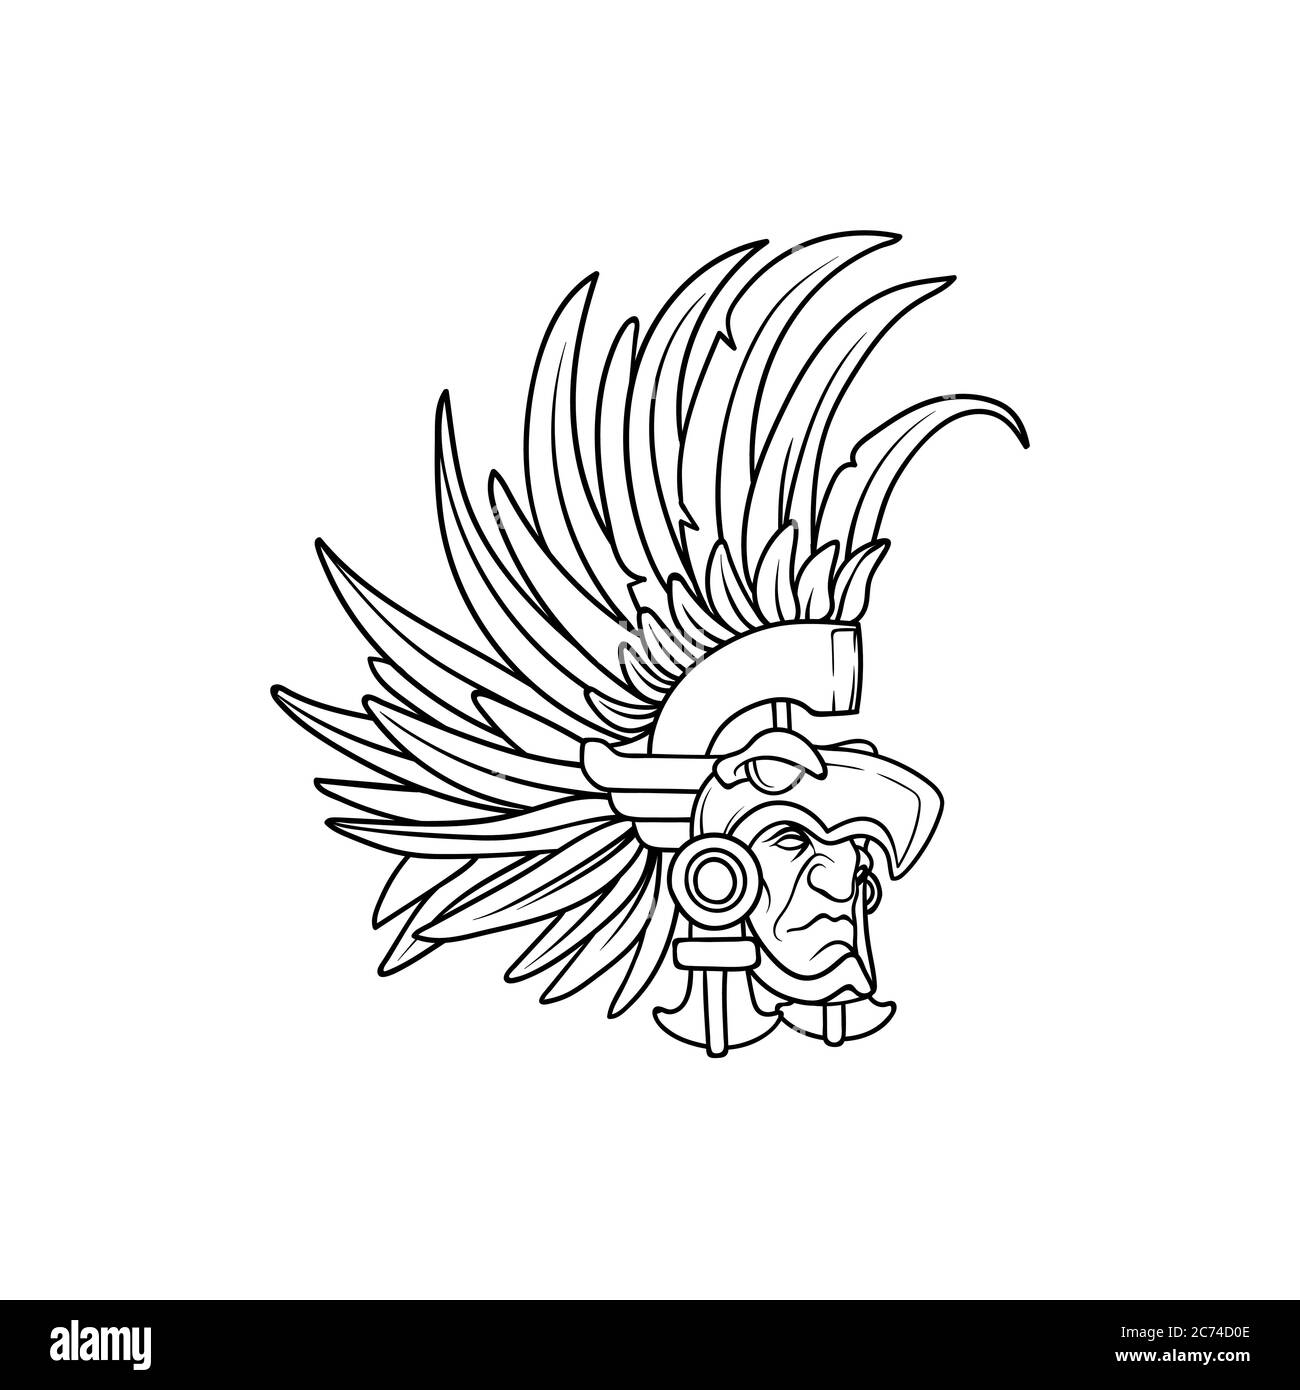 Guerrero águila fotografías e imágenes de alta resolución - Alamy